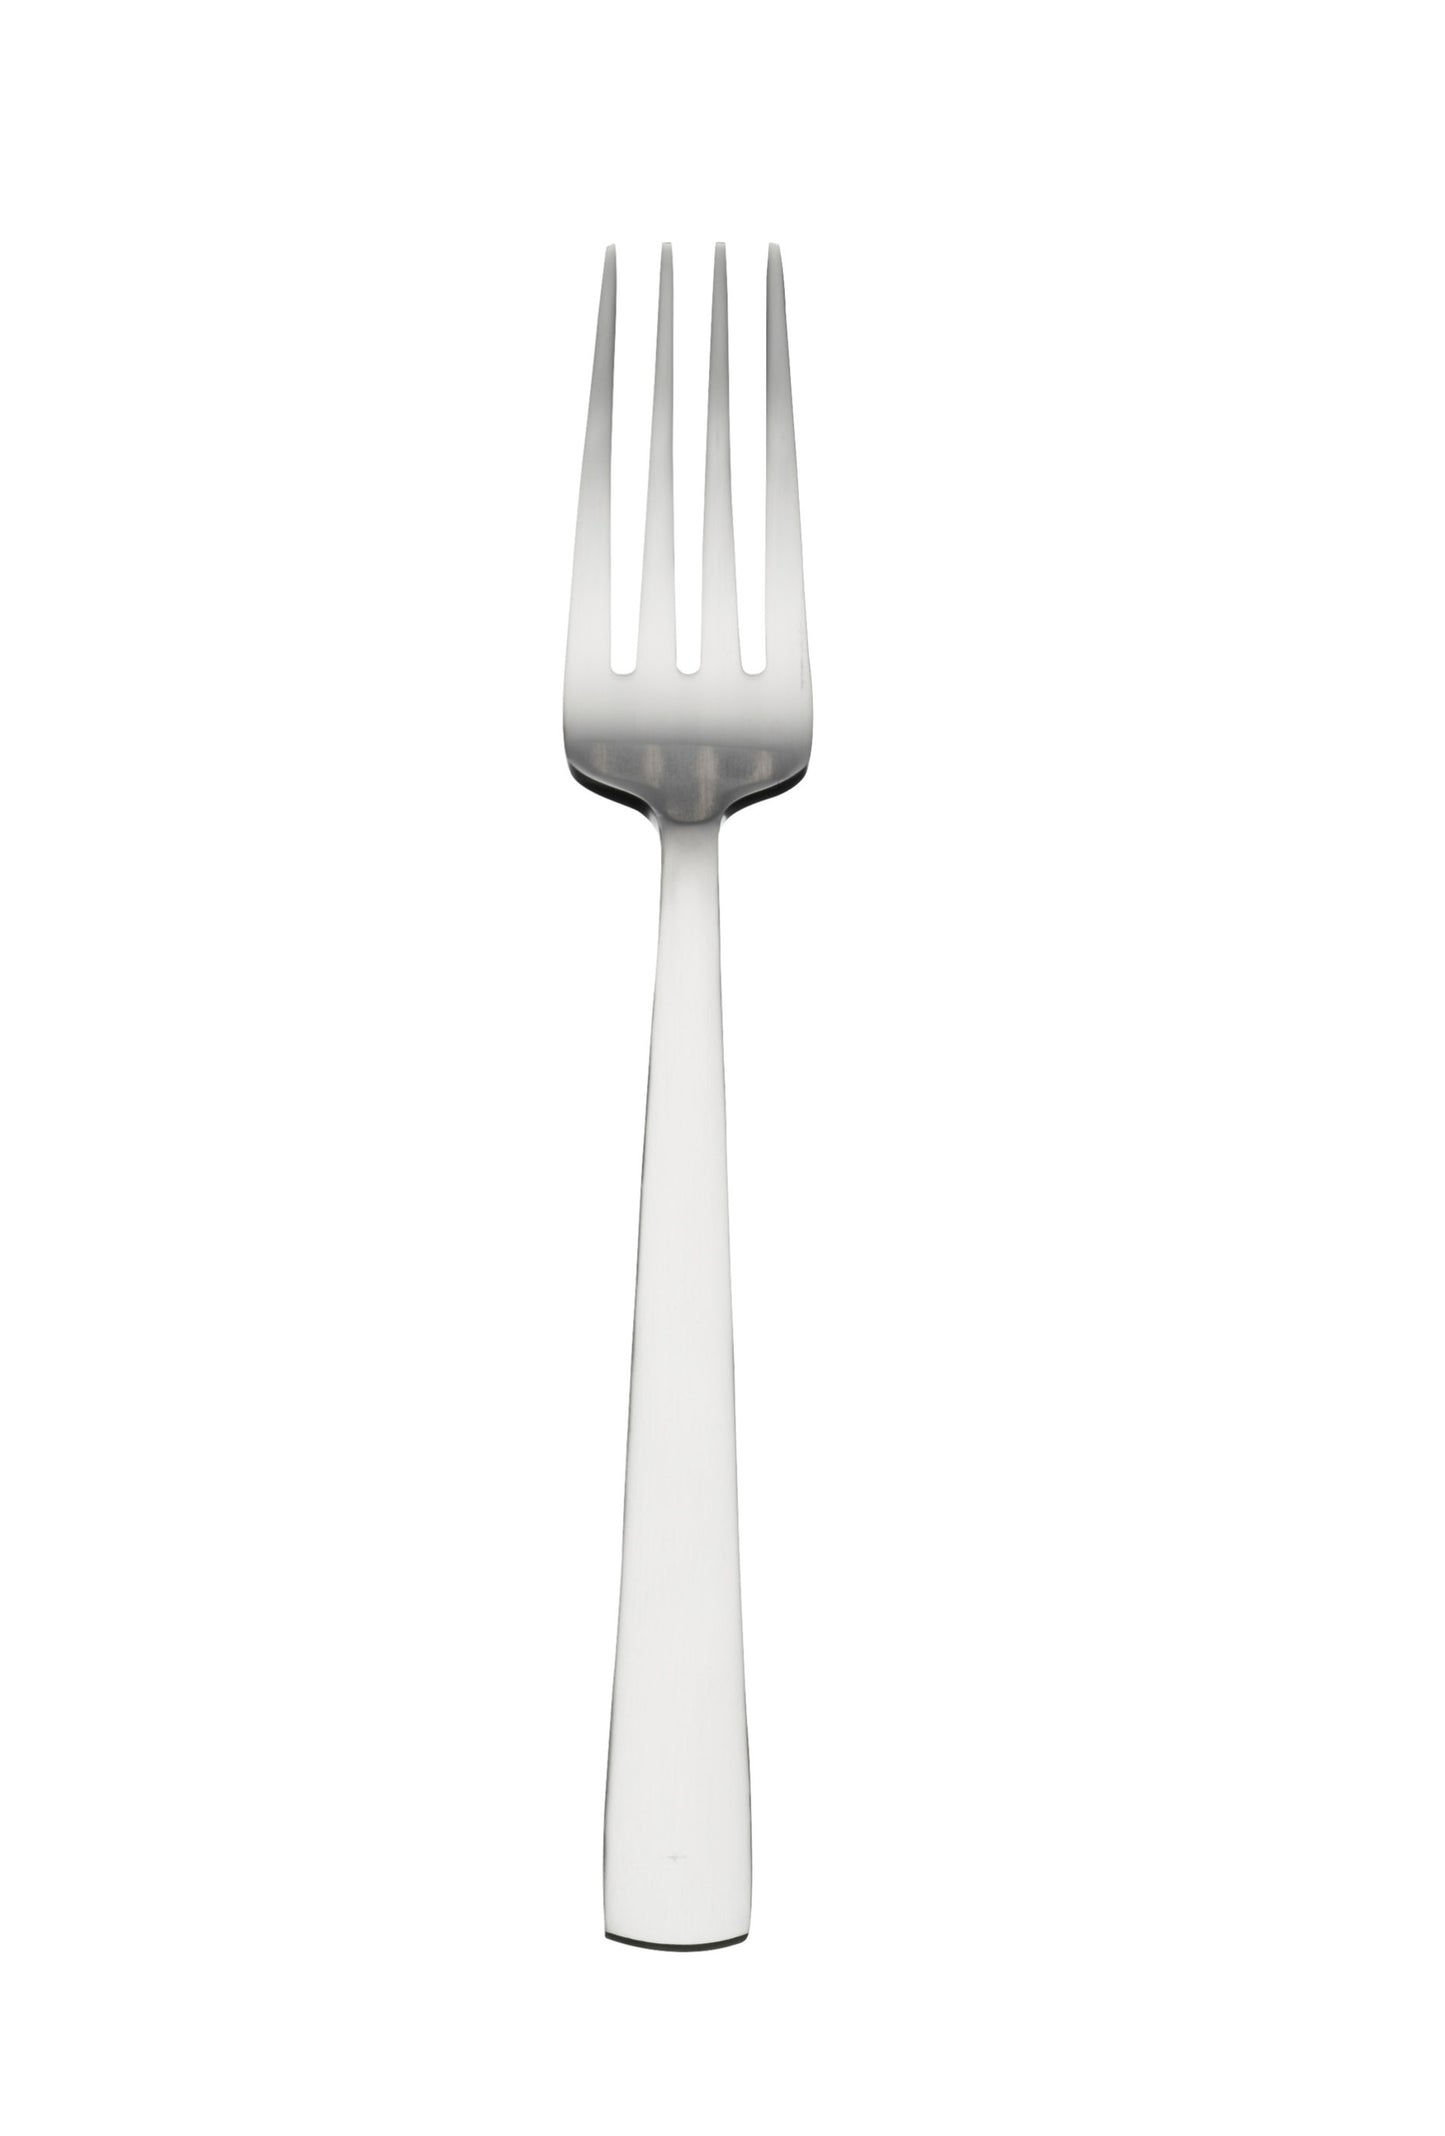 Table fork (20 cm.)